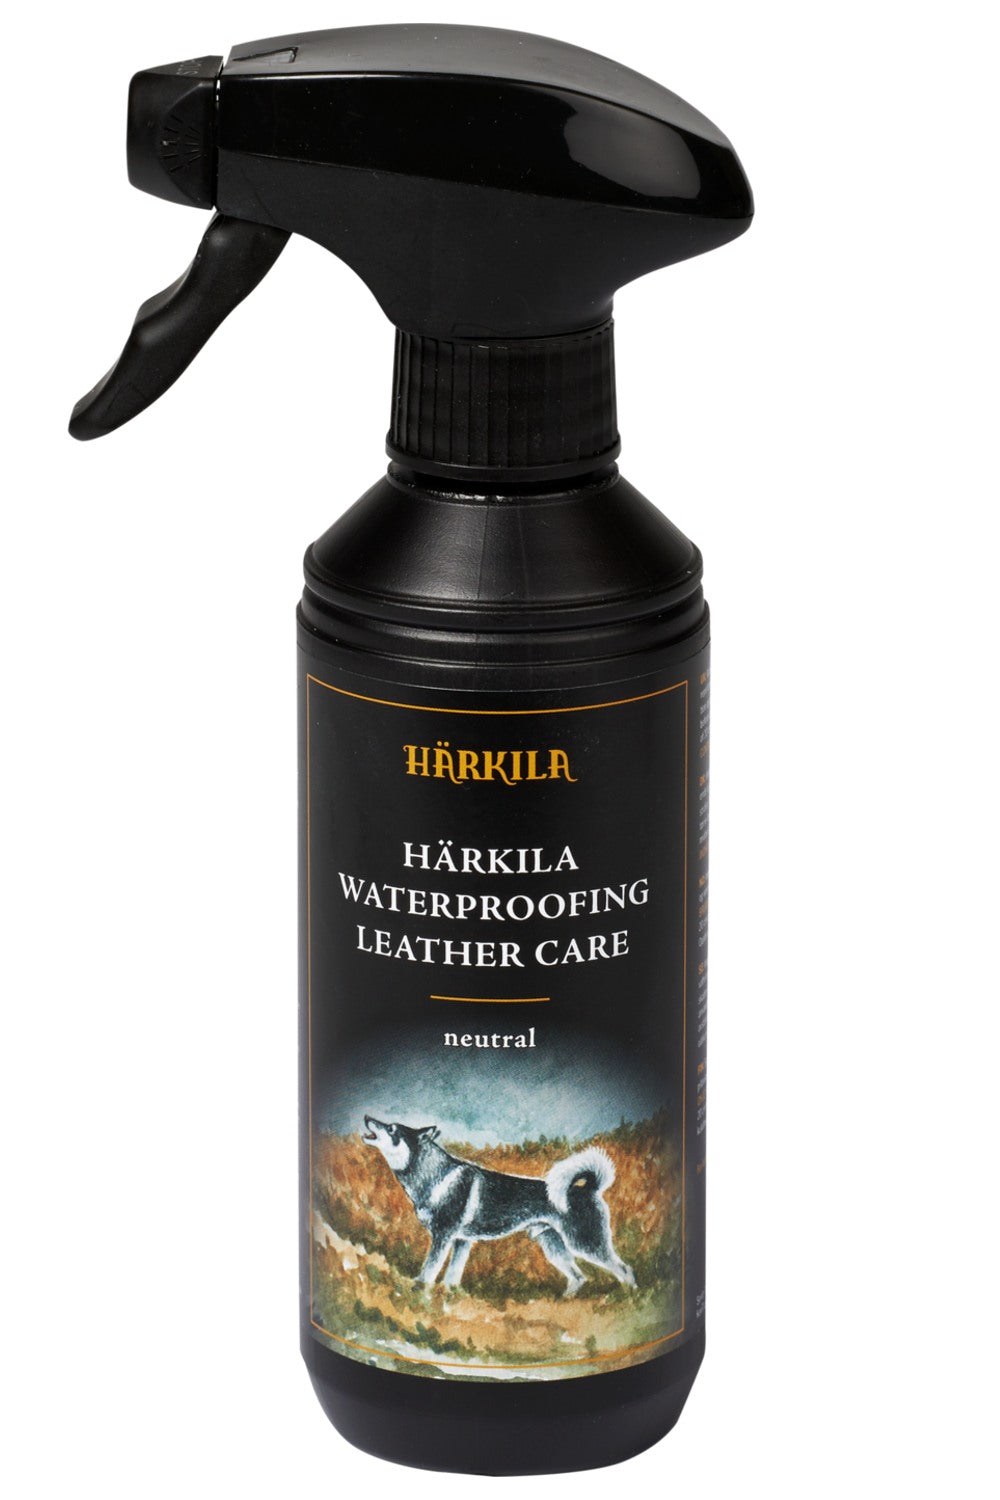 Harkila Waterproofing Leather Care Neutral Showing the bottle